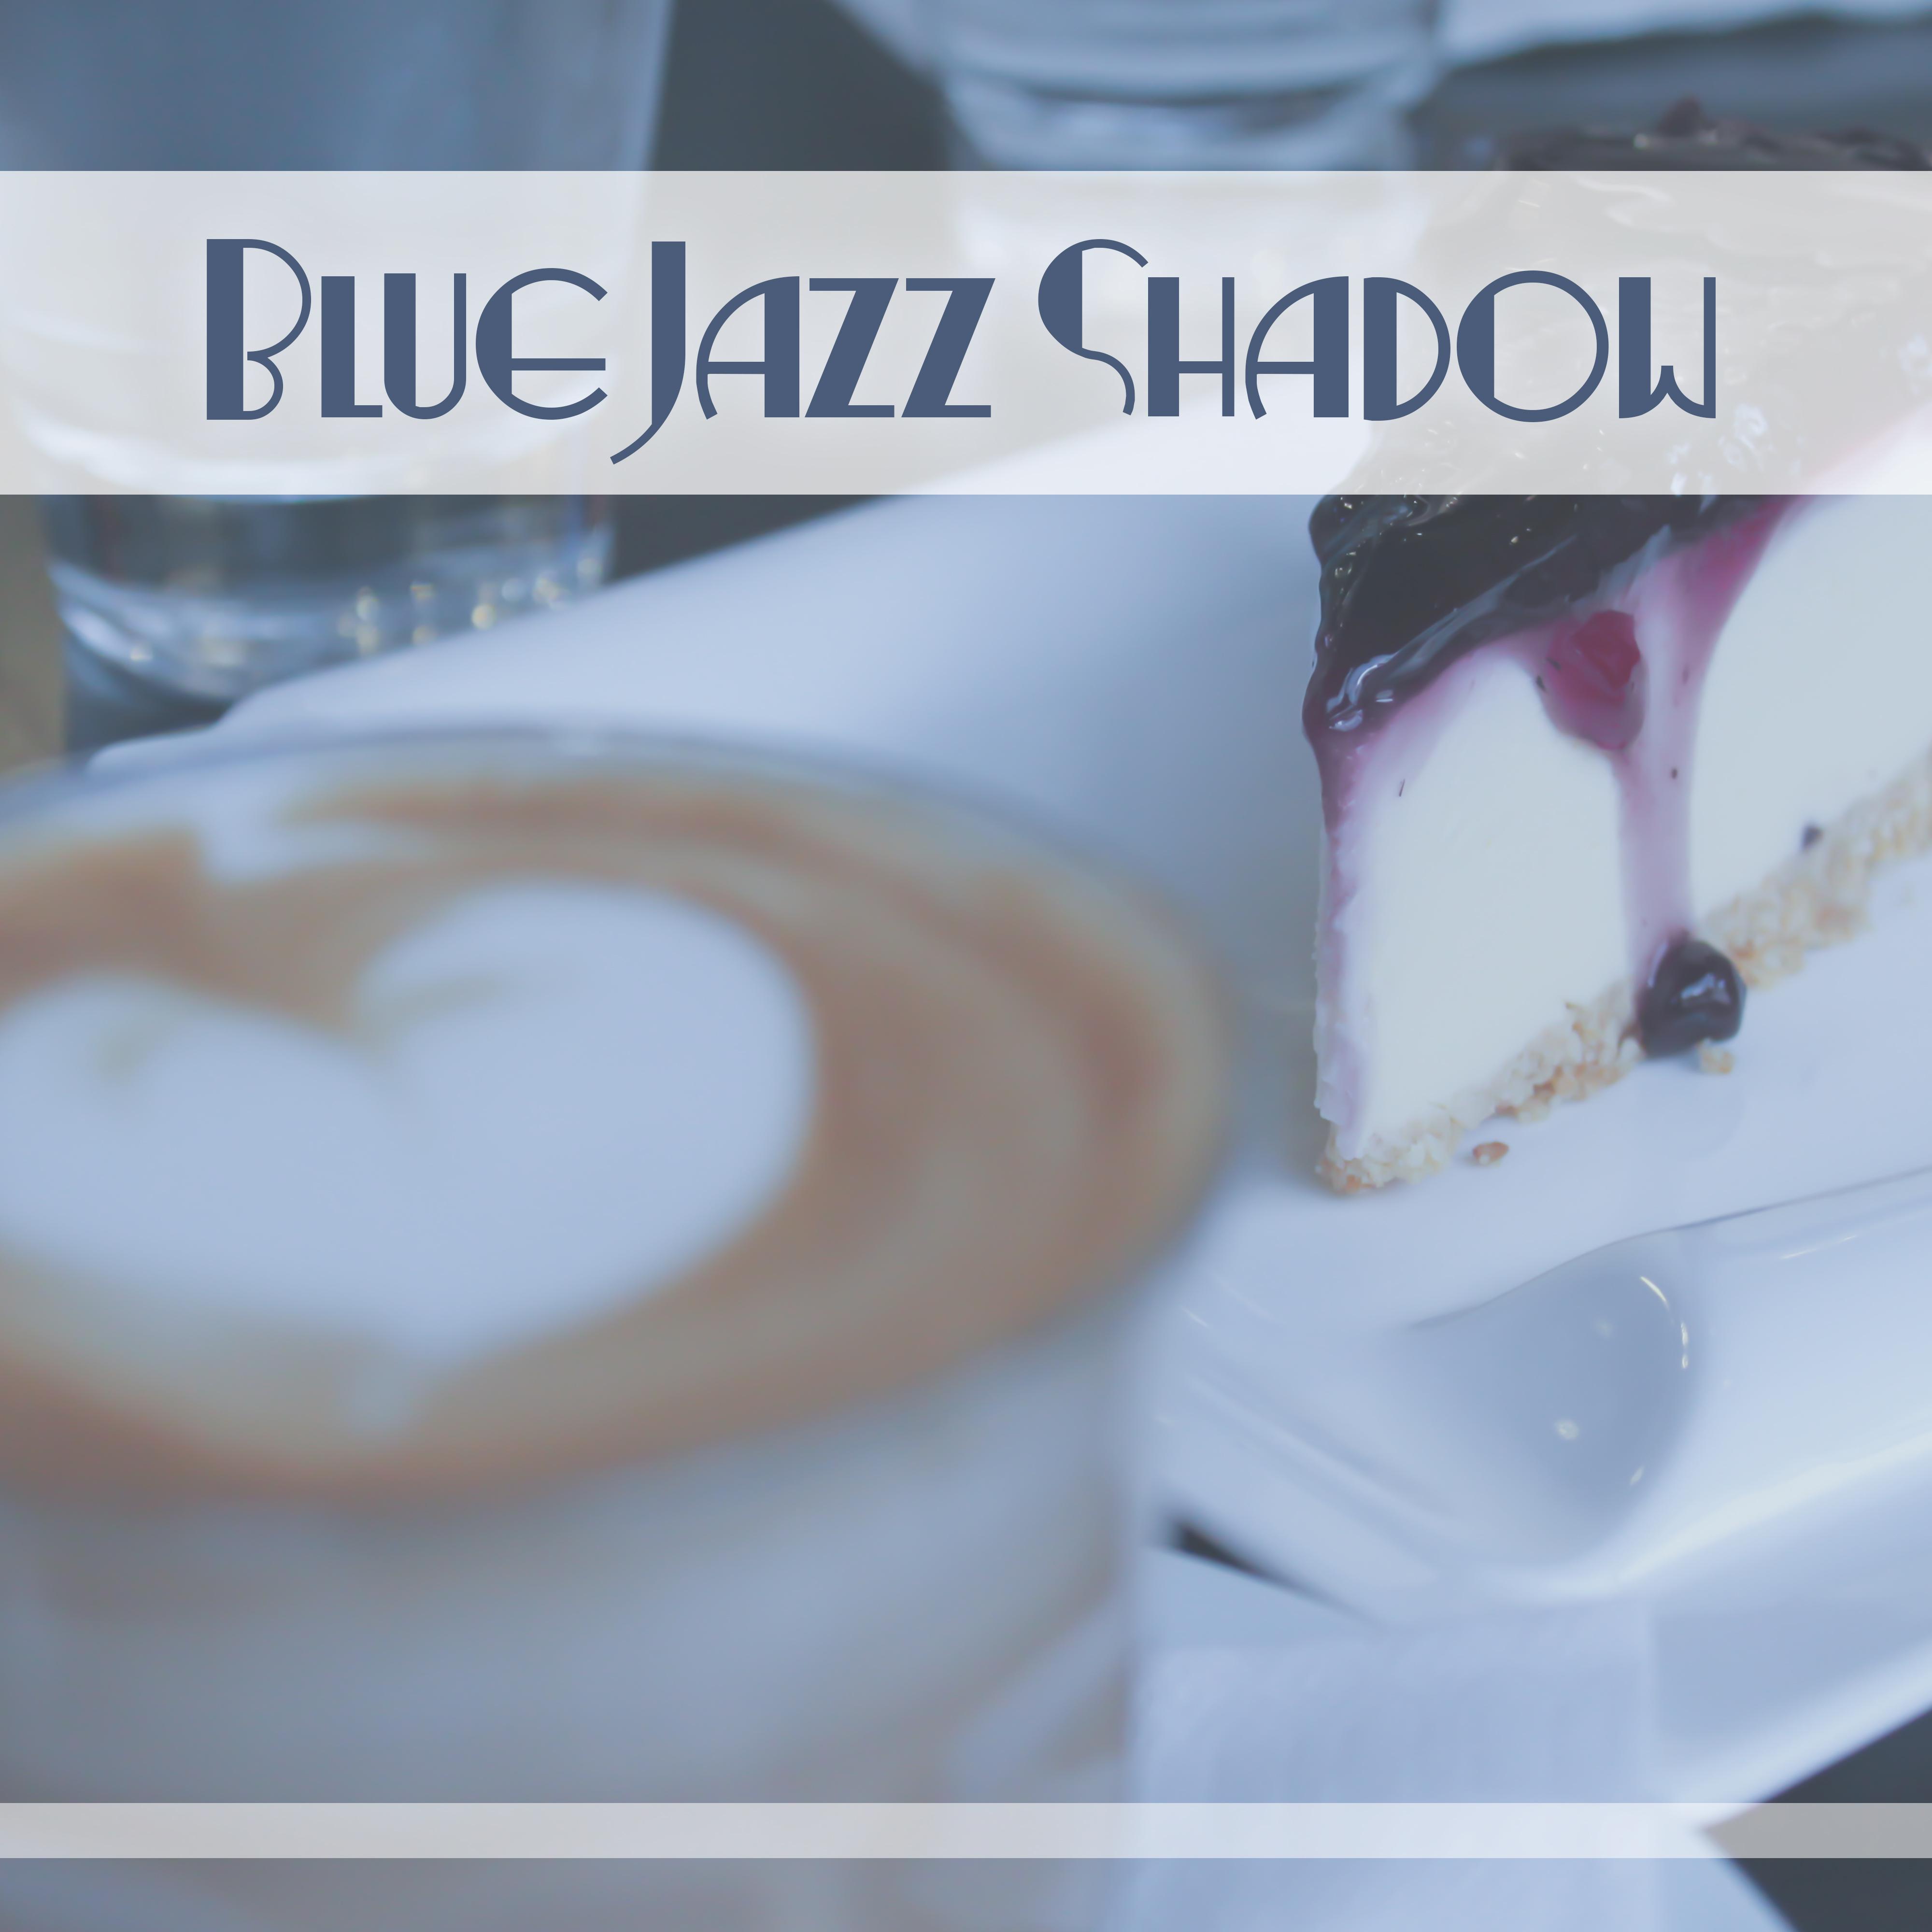 Blue Jazz Shadow  Instrumental Jazz, Easy Listening, Coffee Talk Background, Cafe Music, Mellow Jazz Lounge